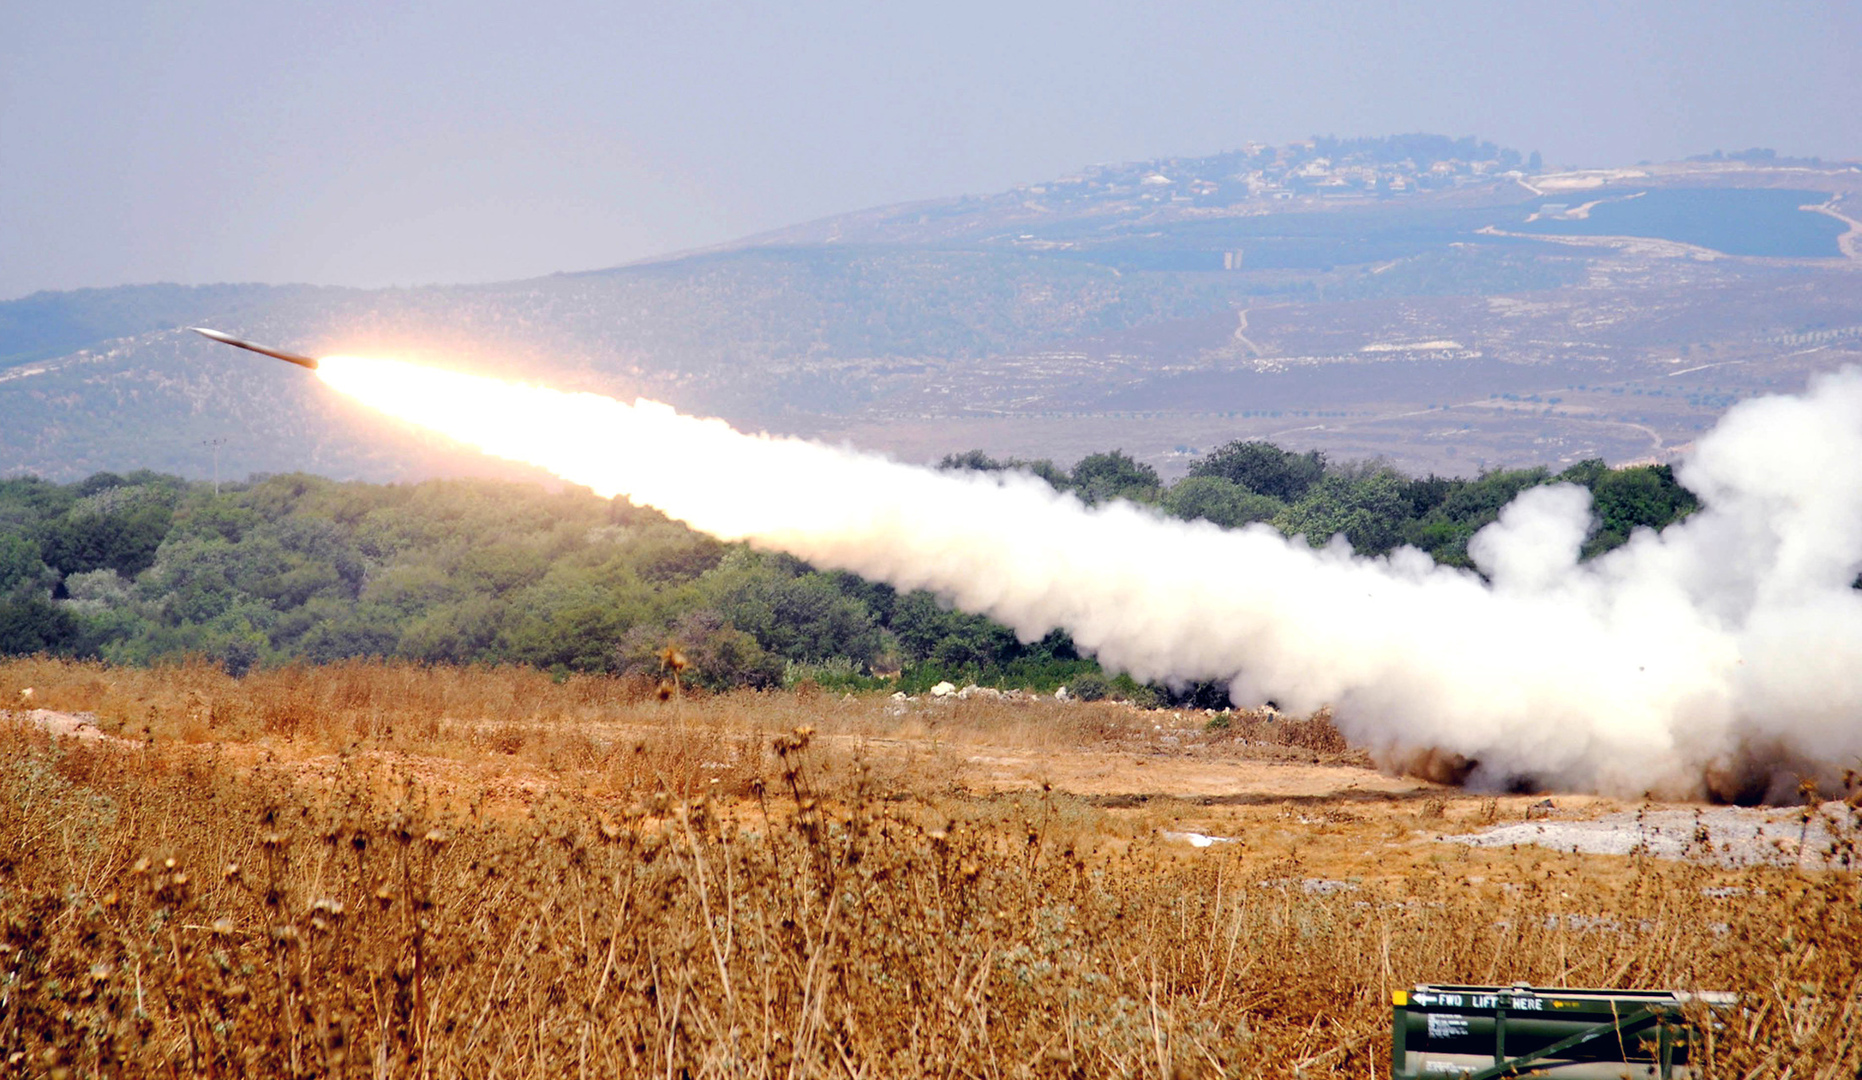 إطلاق صاروخين من لبنان باتجاه موقعين "إسرائيليين"